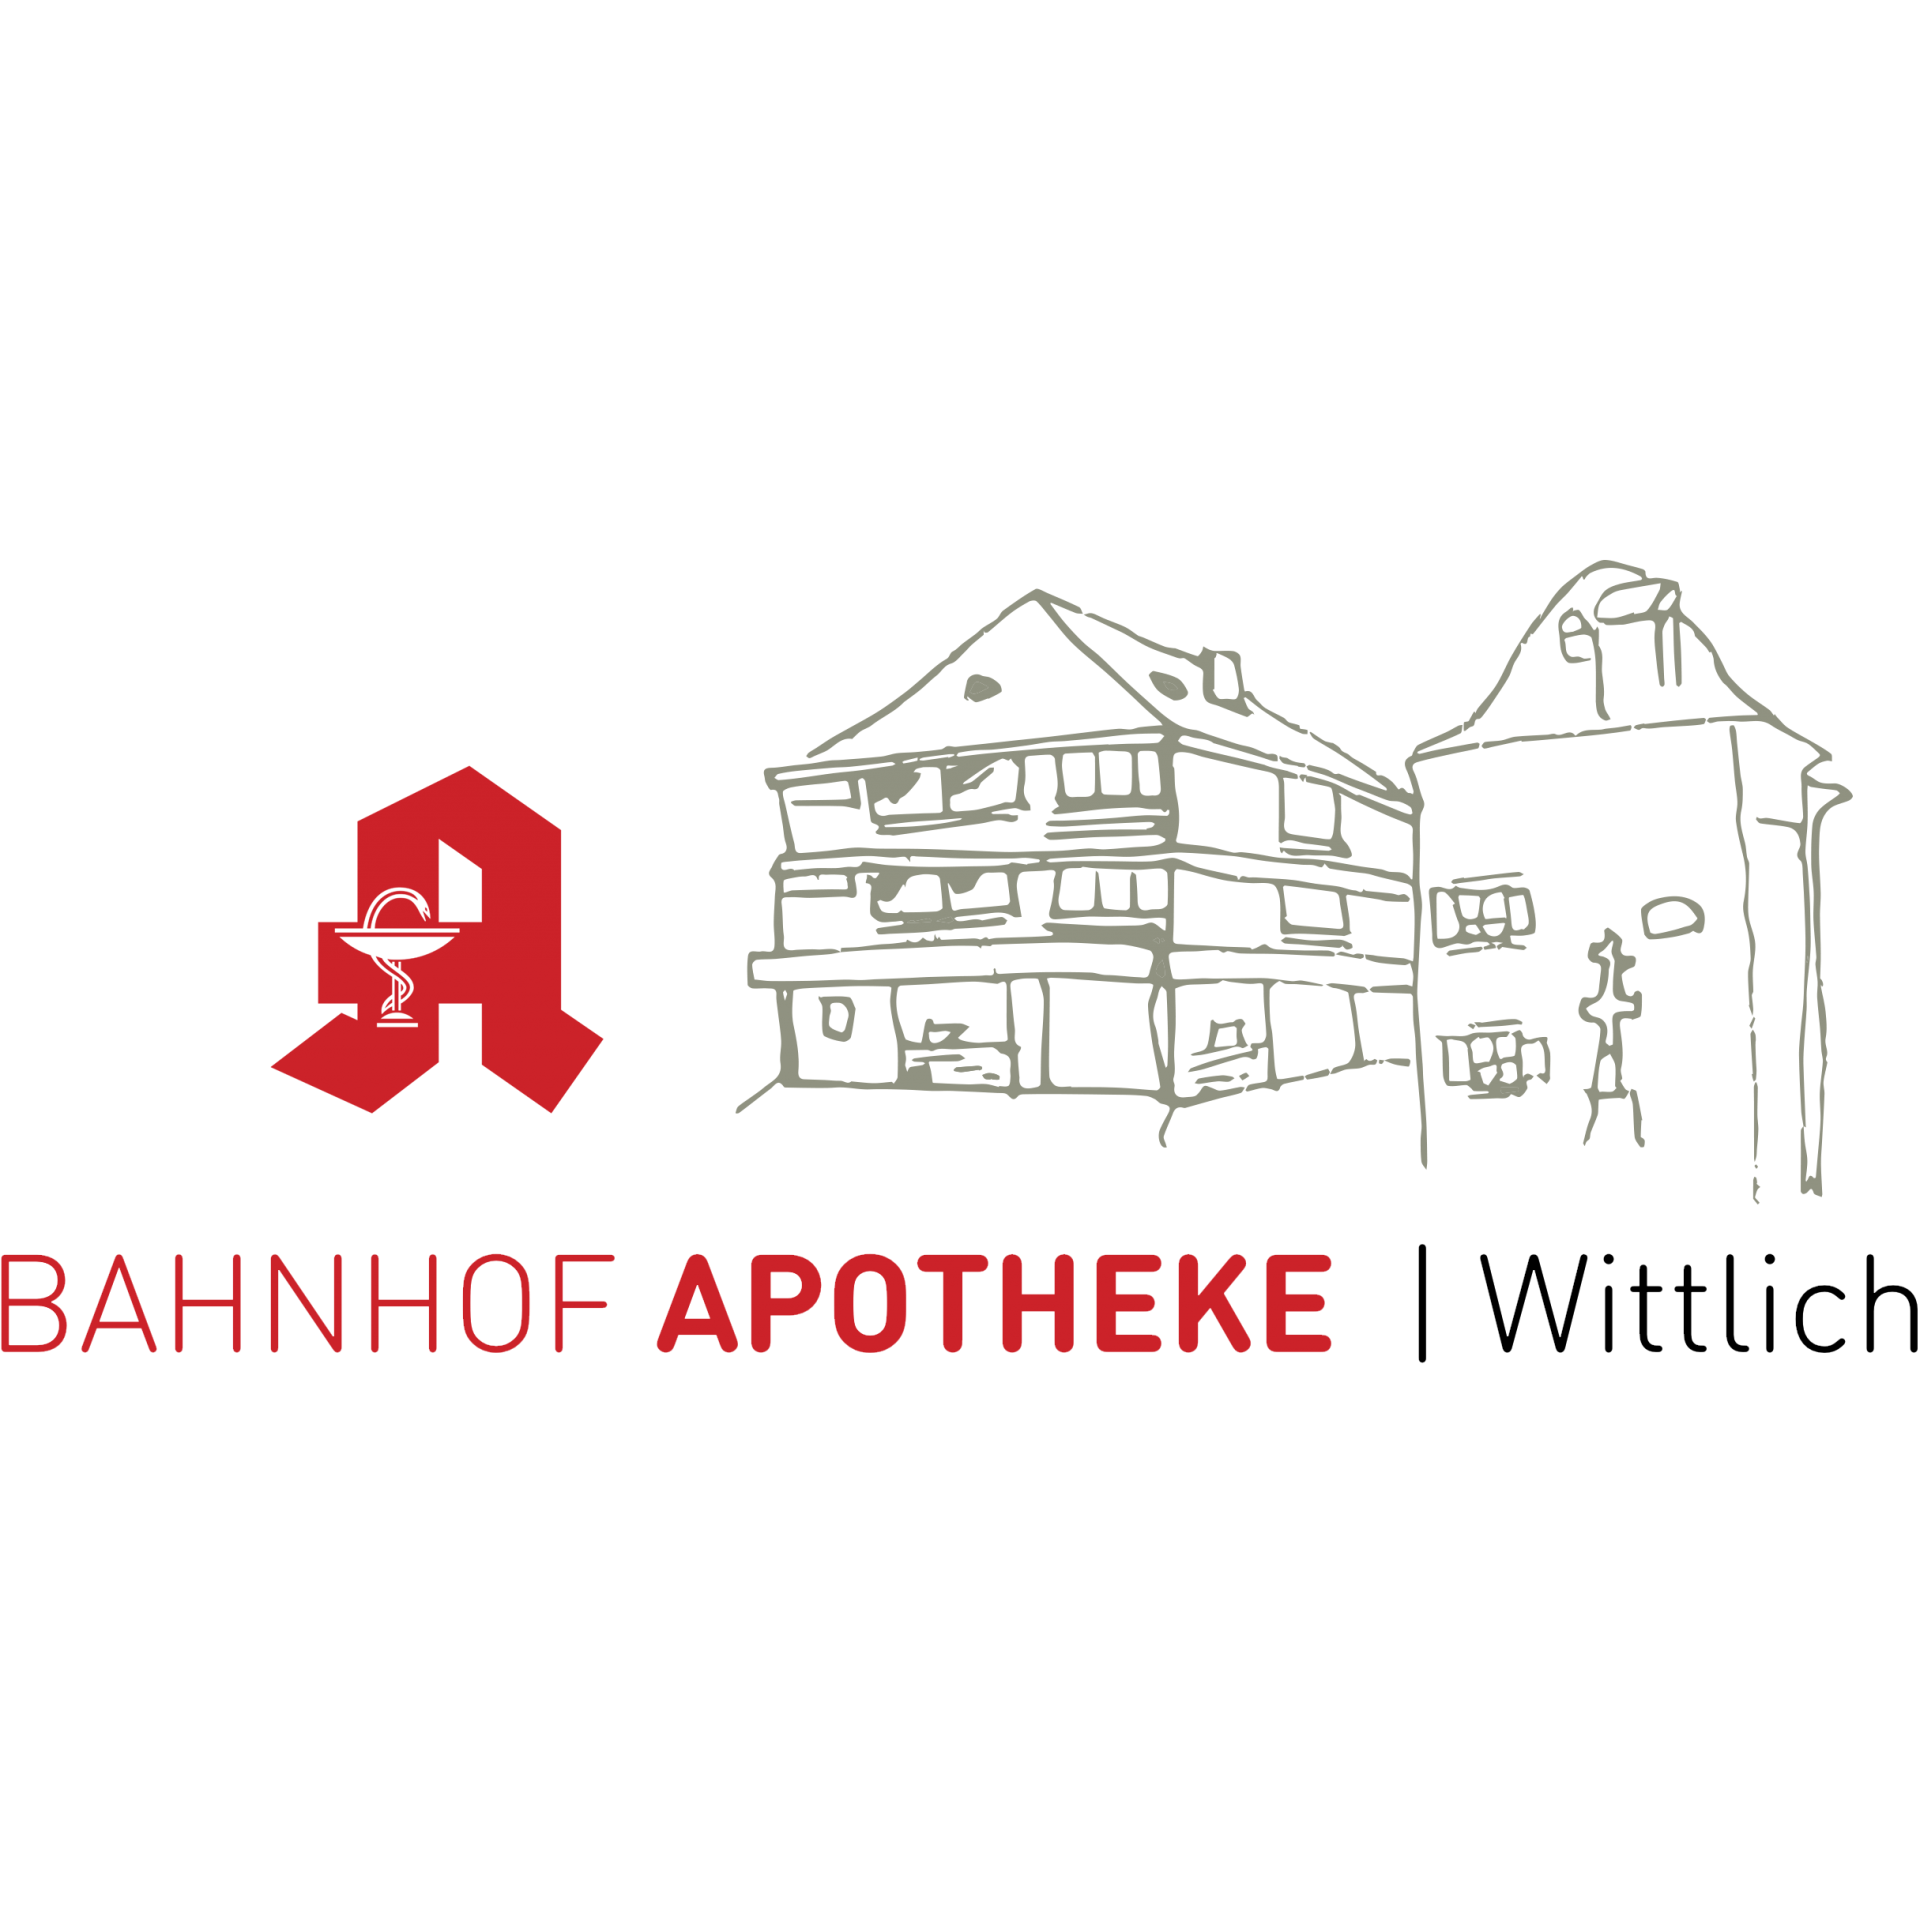 Logo Logo der Bahnhof-Apotheke